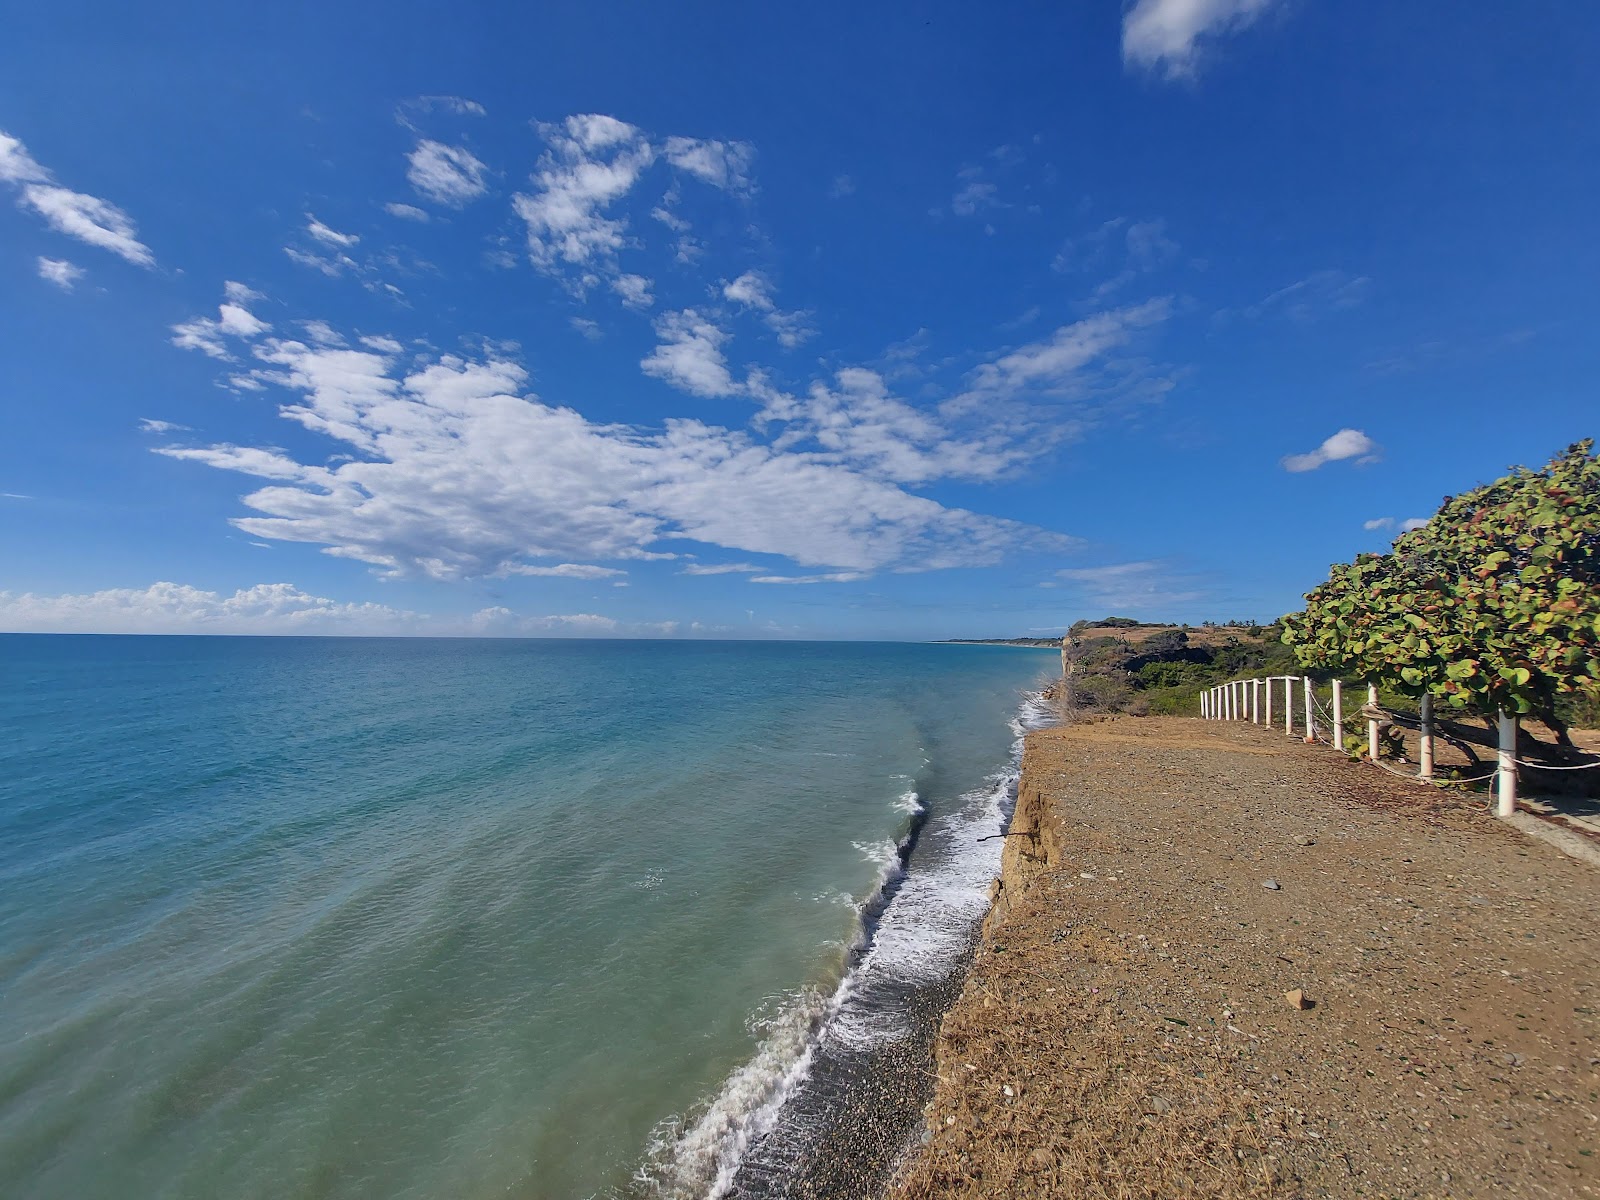 Fotografija Playa Matanzas z sivi fini kamenček površino